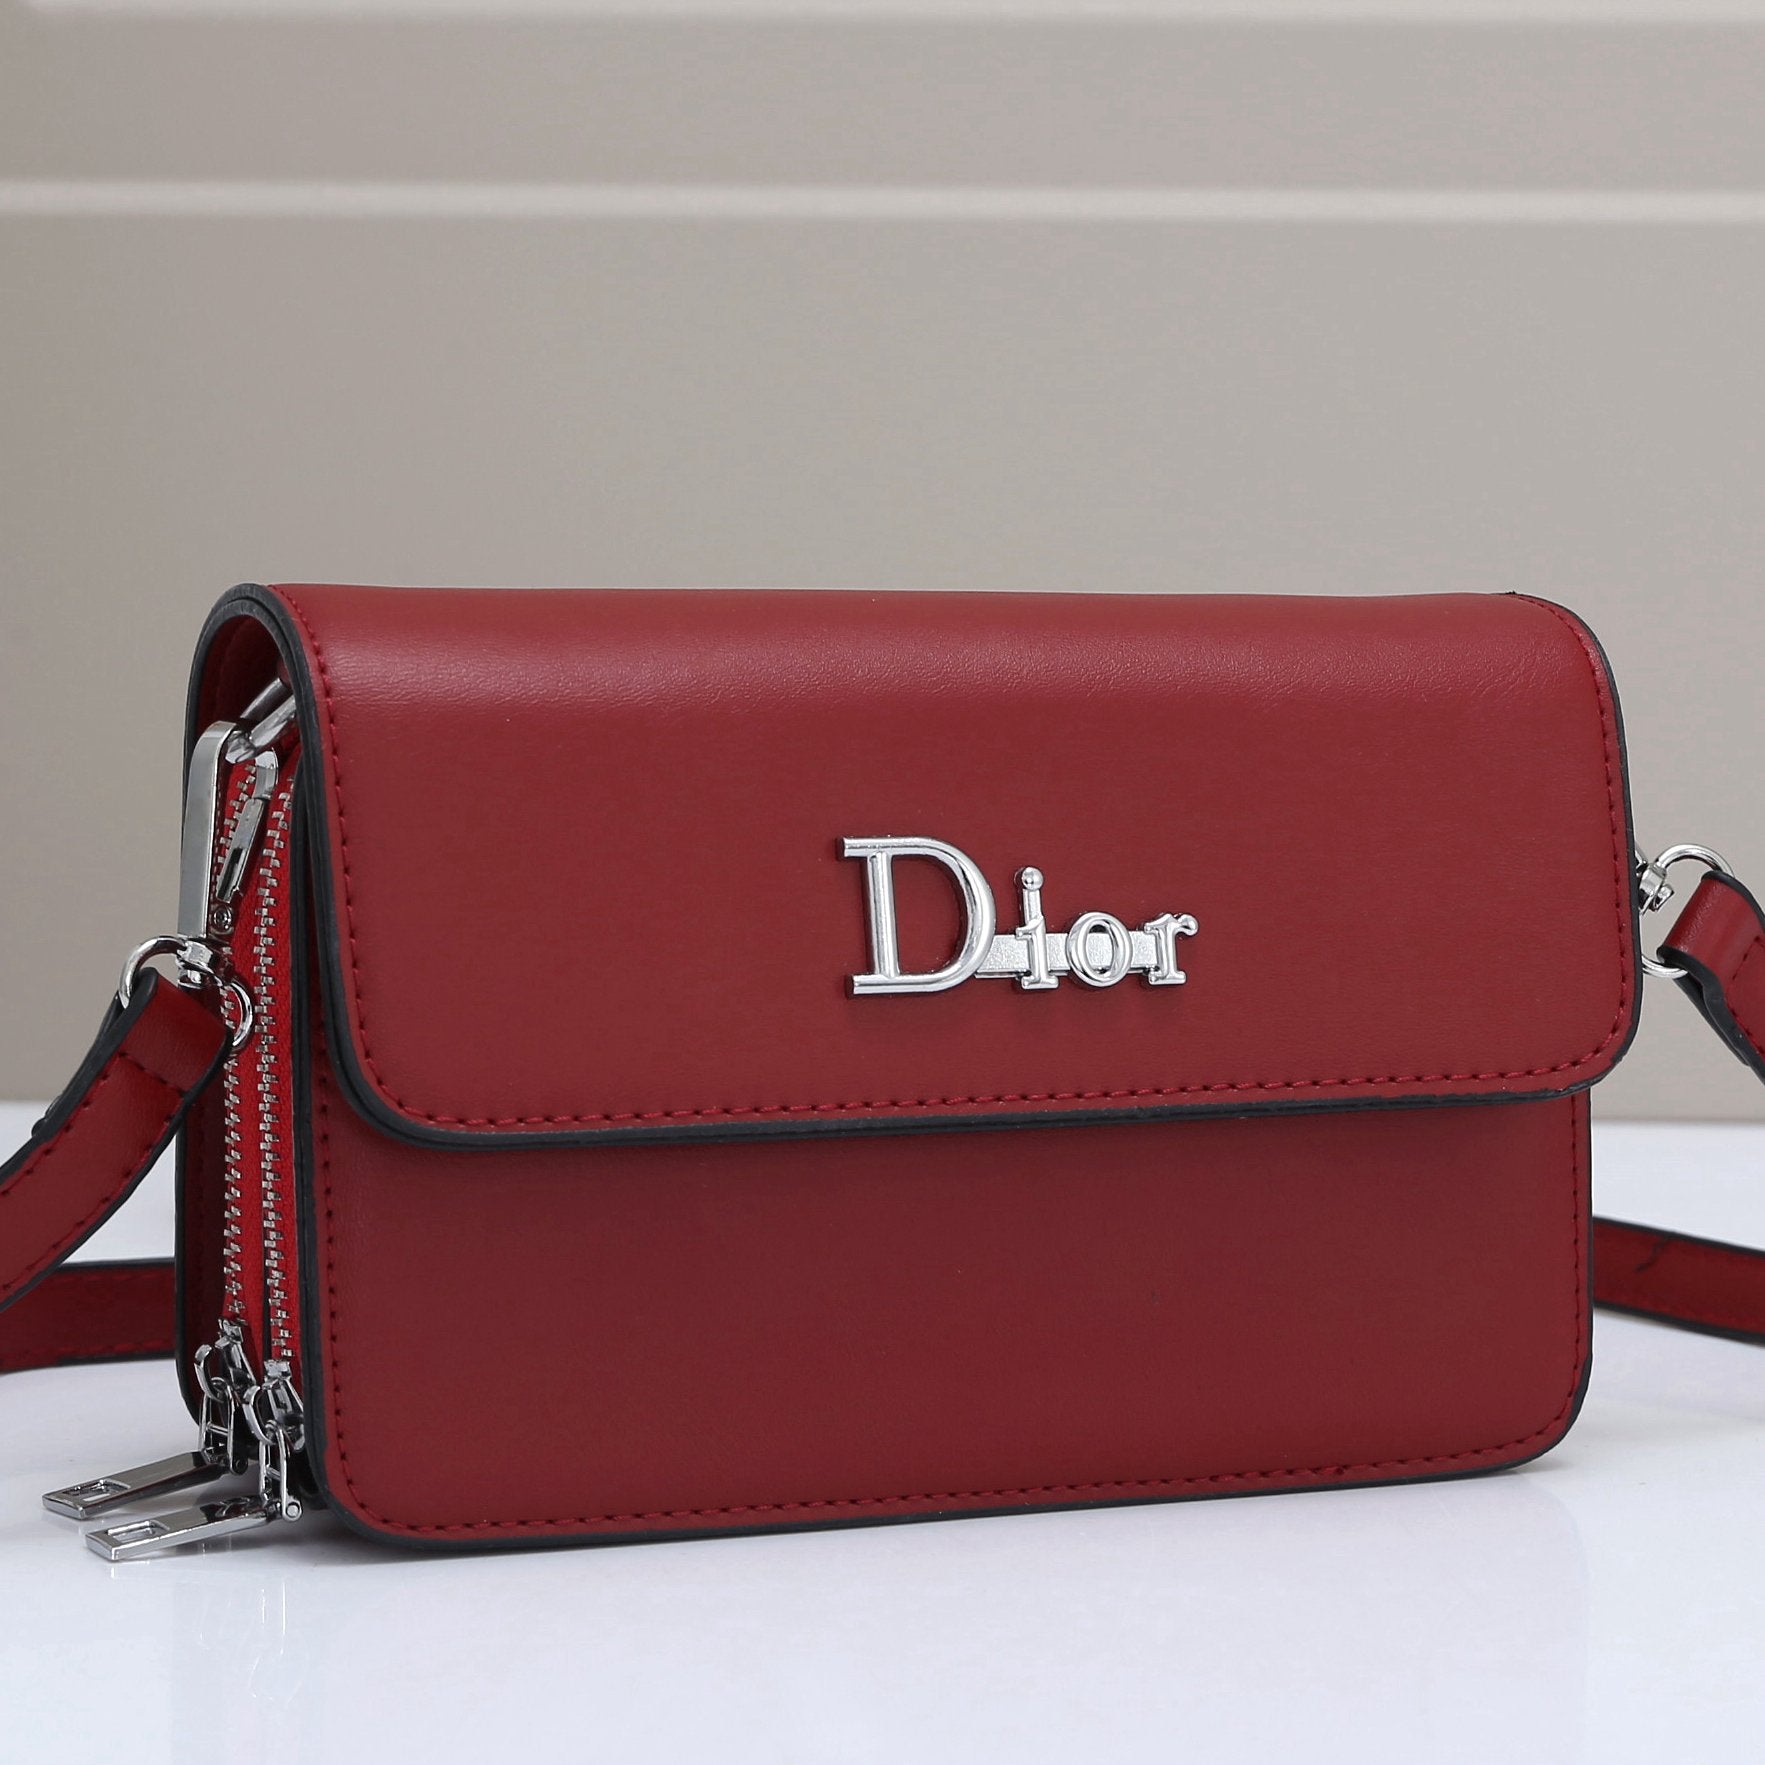 Dior Fashion Leather Crossbody Satchel Shoulder Bag